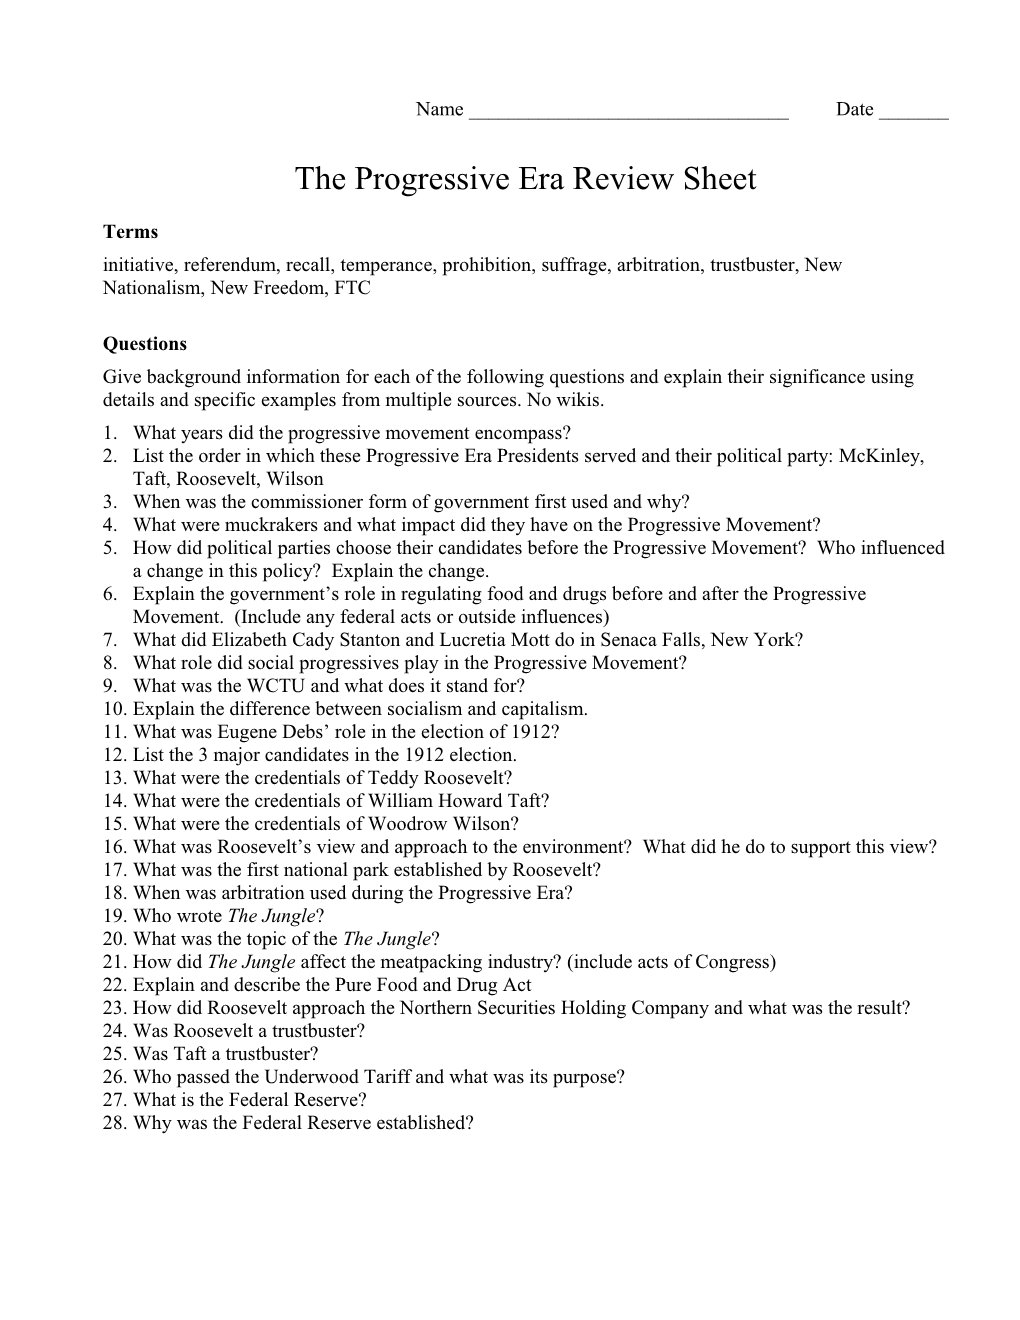 The Progressive Era Review Sheet